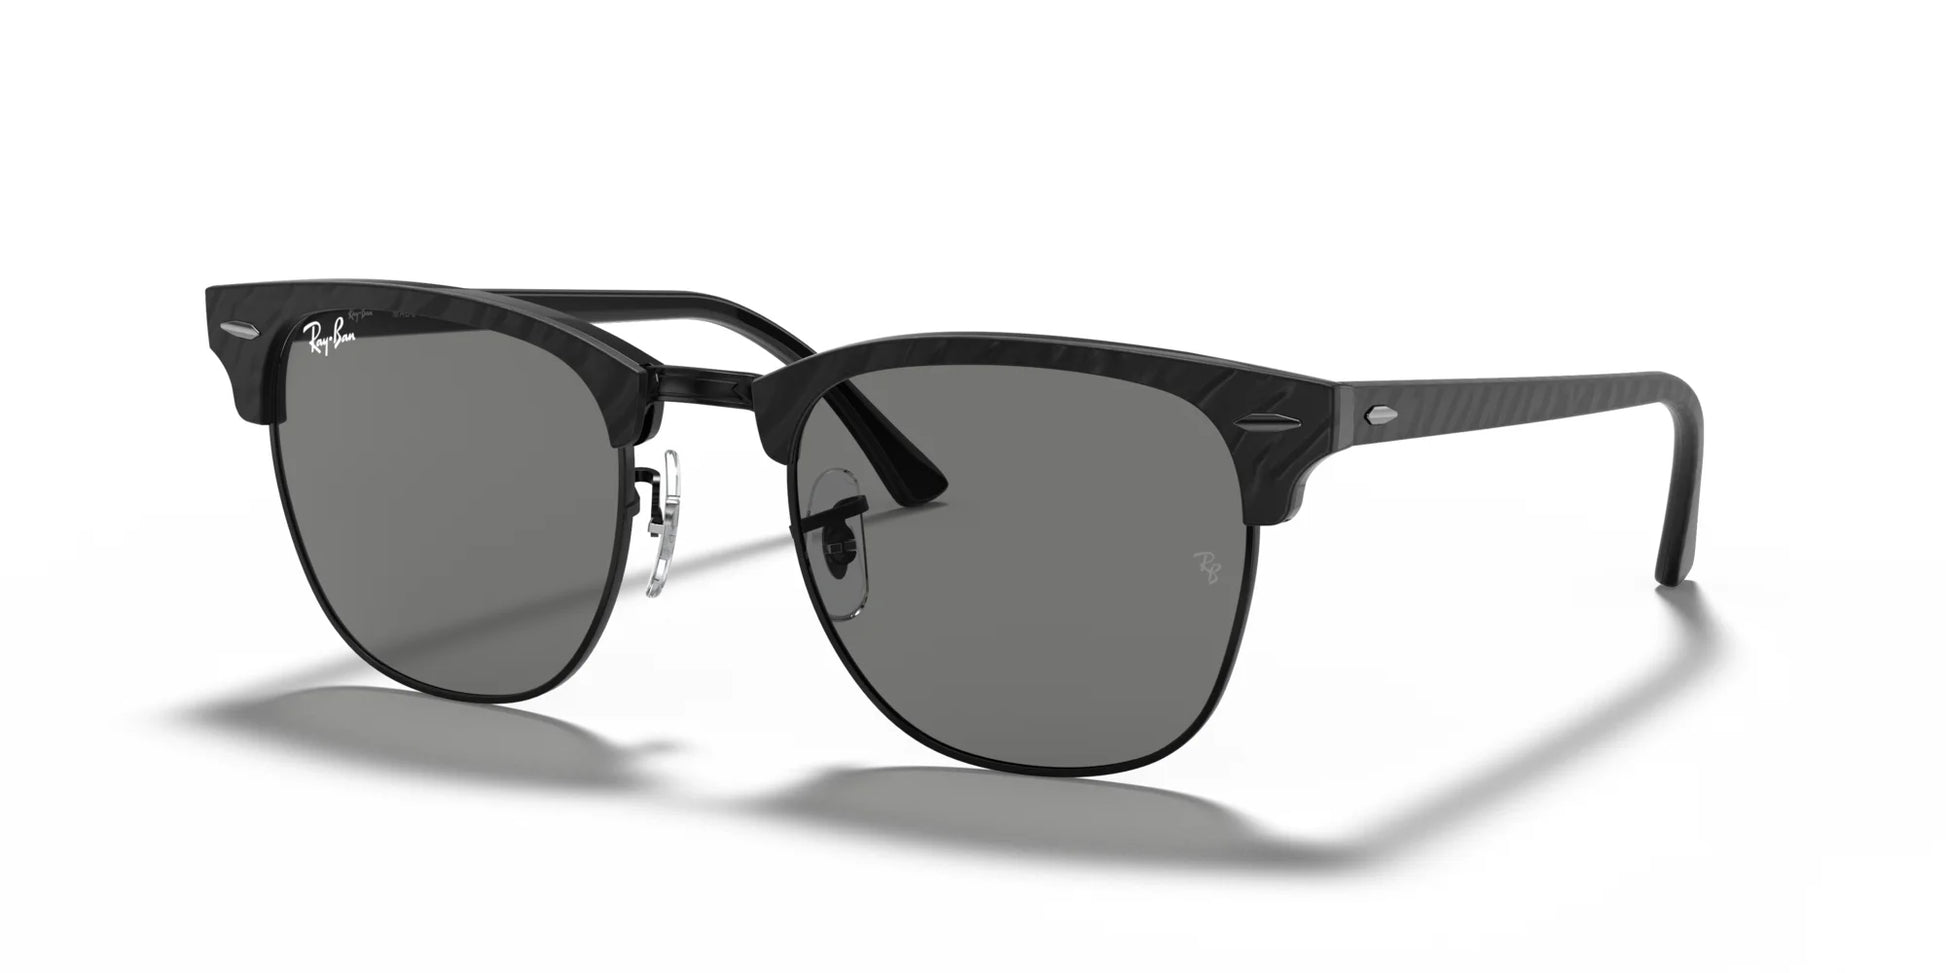 Ray-Ban CLUBMASTER RB3016 Sunglasses Black / Dark Grey